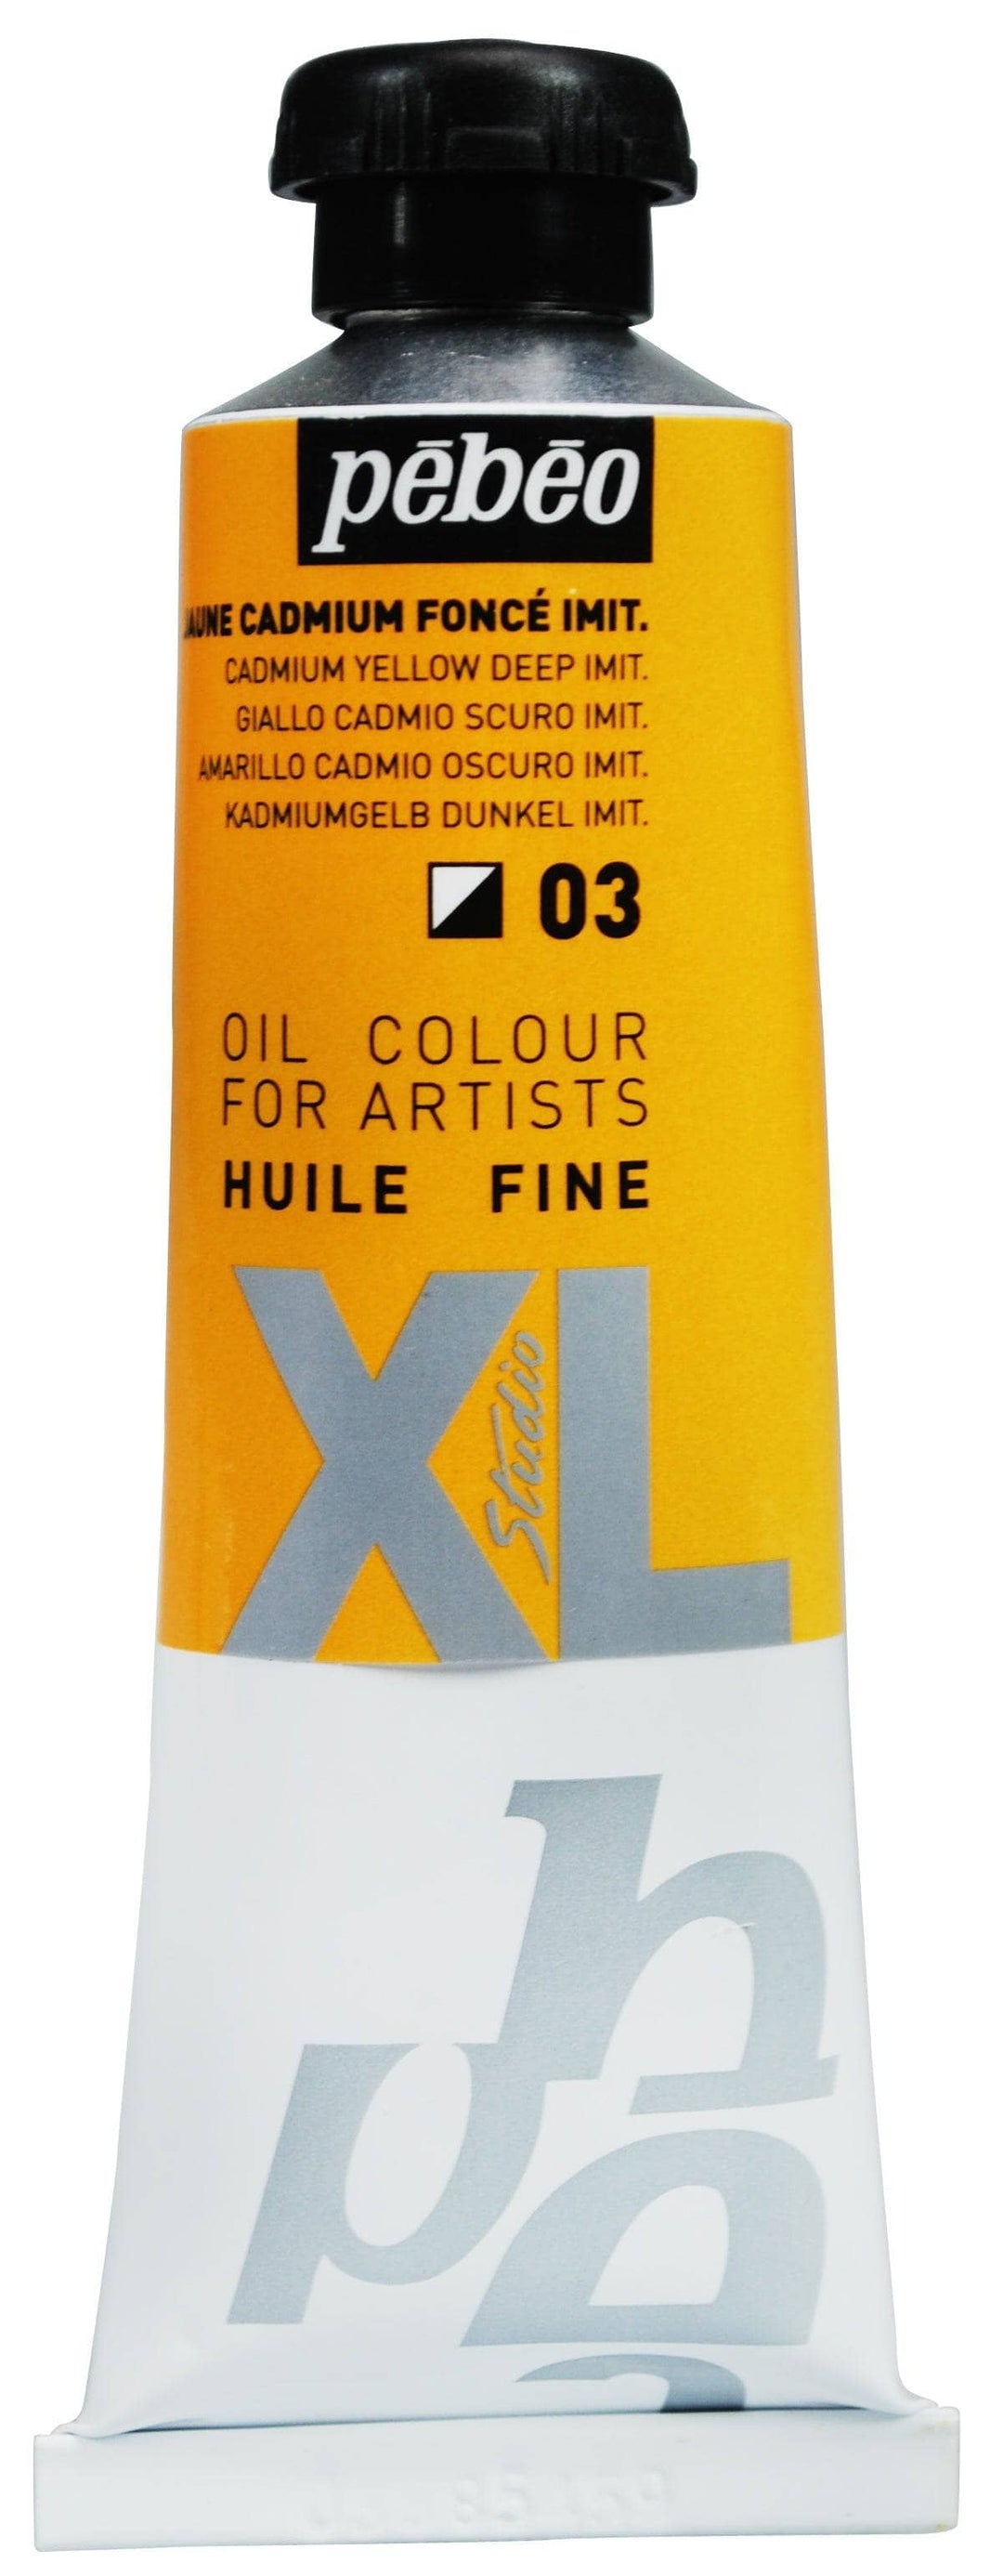 Huile fine Studio XL 37ml - Jaune Cadmium Foncé Imit.
PB937003